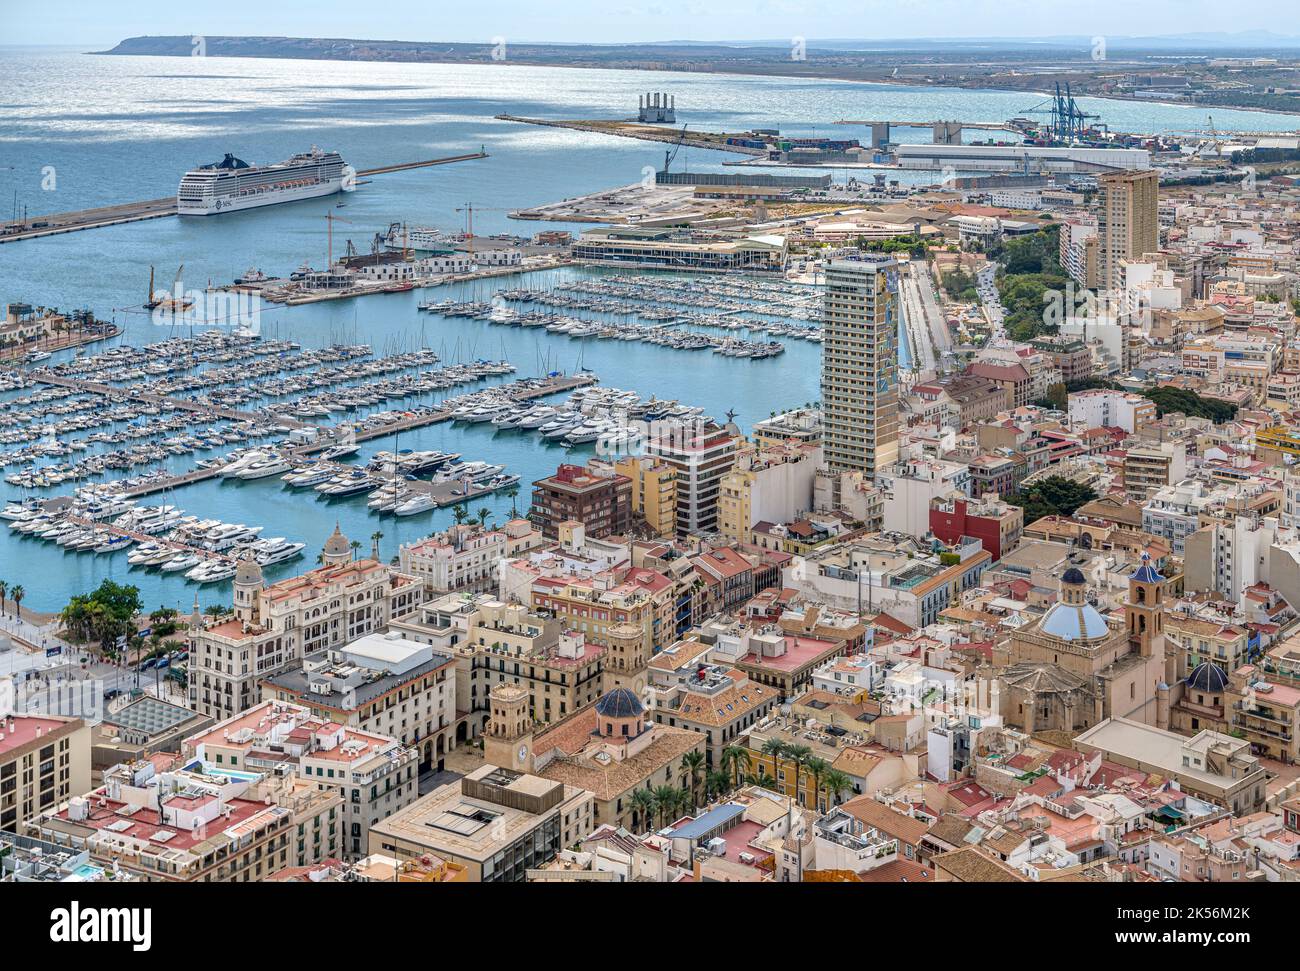 A bird's eye view over the port city of Alicante on the Costa Blanca in southern Spain. Marina shots taken from Castillo de Santa Barbara. Stock Photo